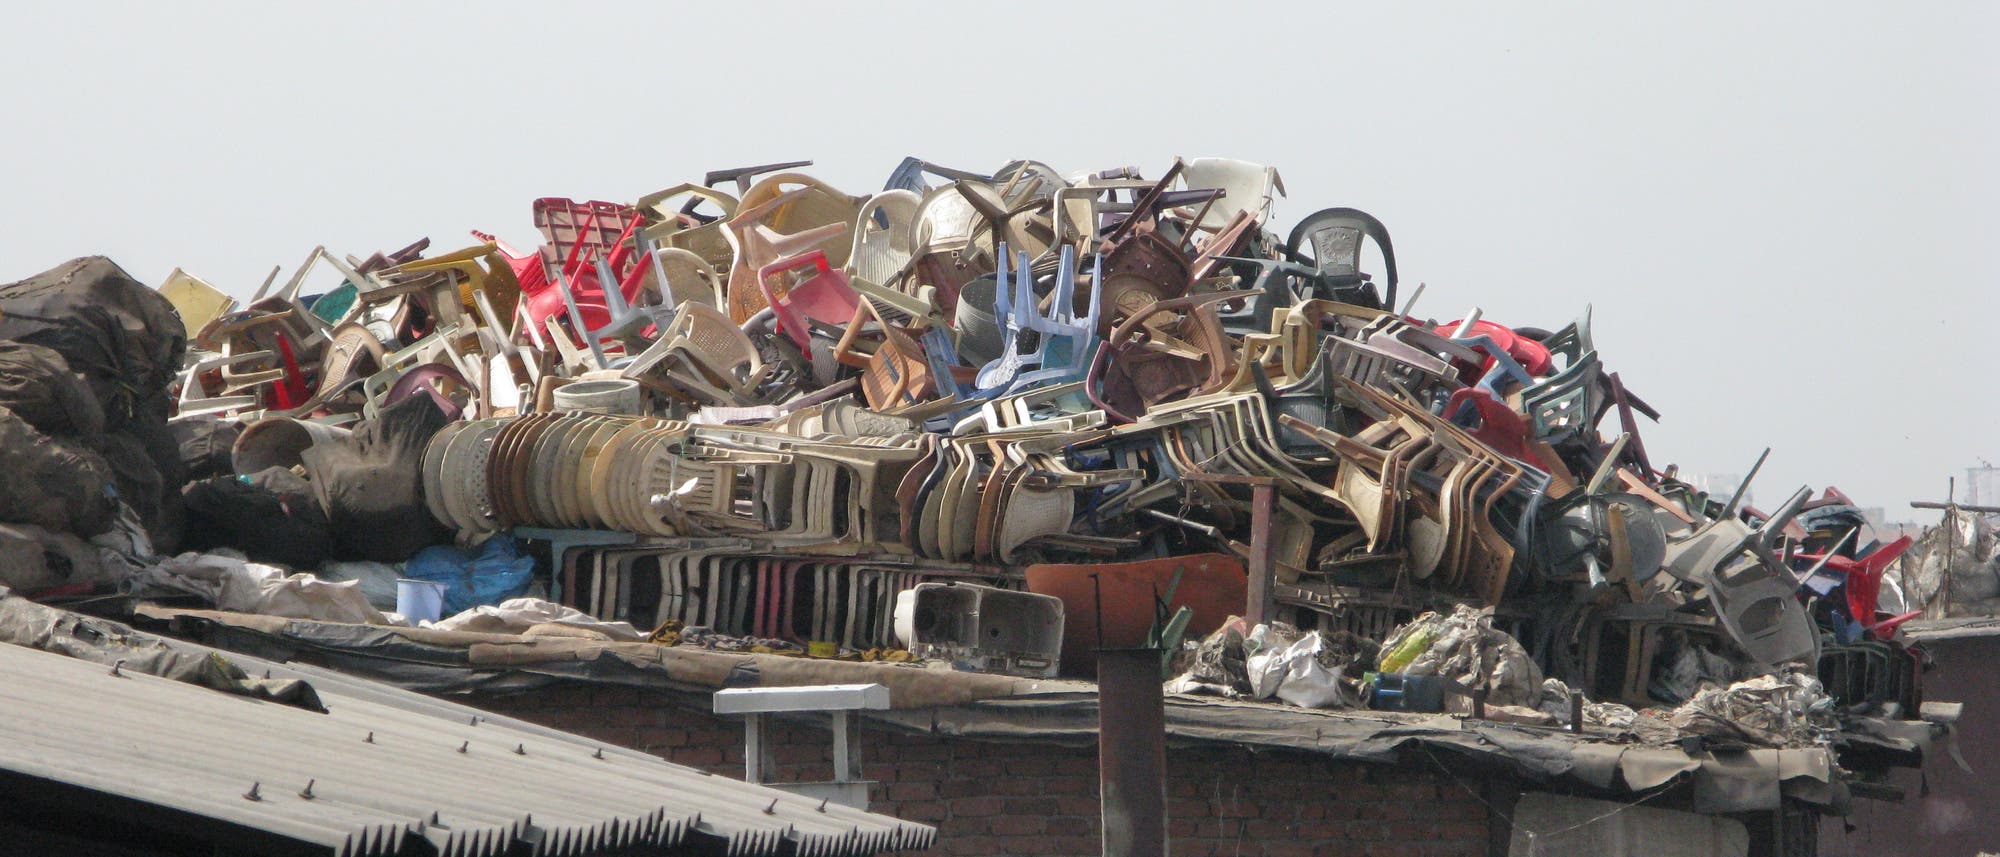 Plastikmüll in einem Slum in Mumbai, Indien